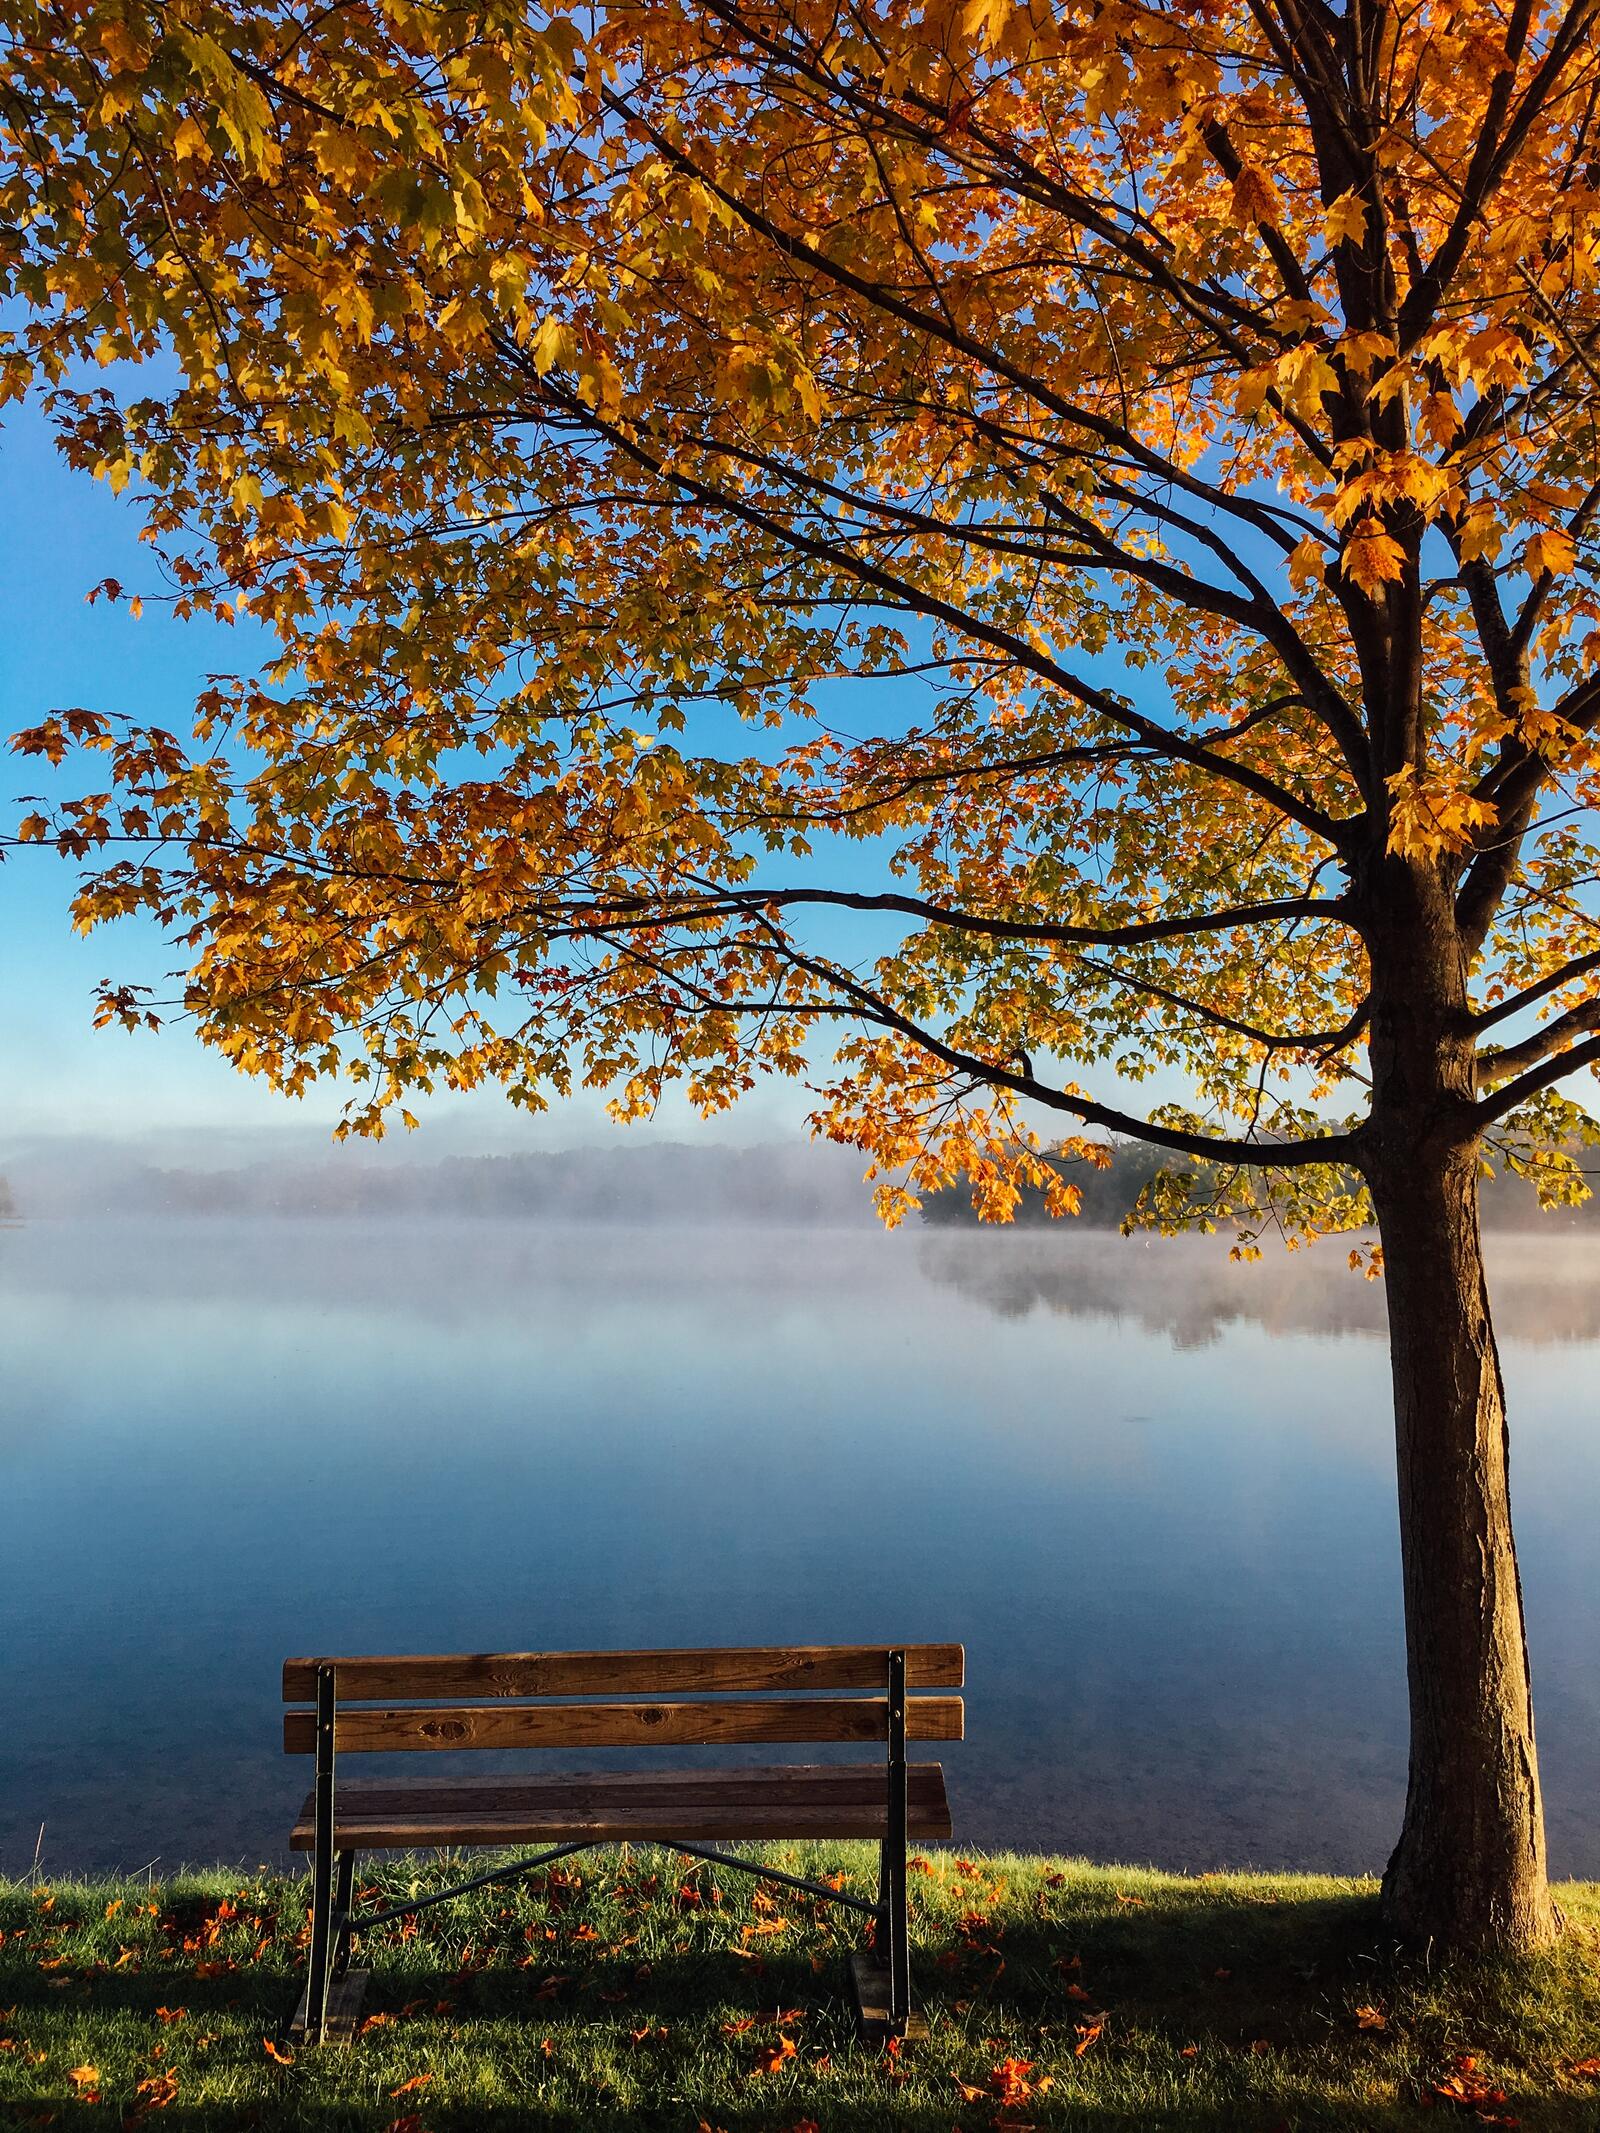 Free photo Autumn tree on the lake shore near the bench